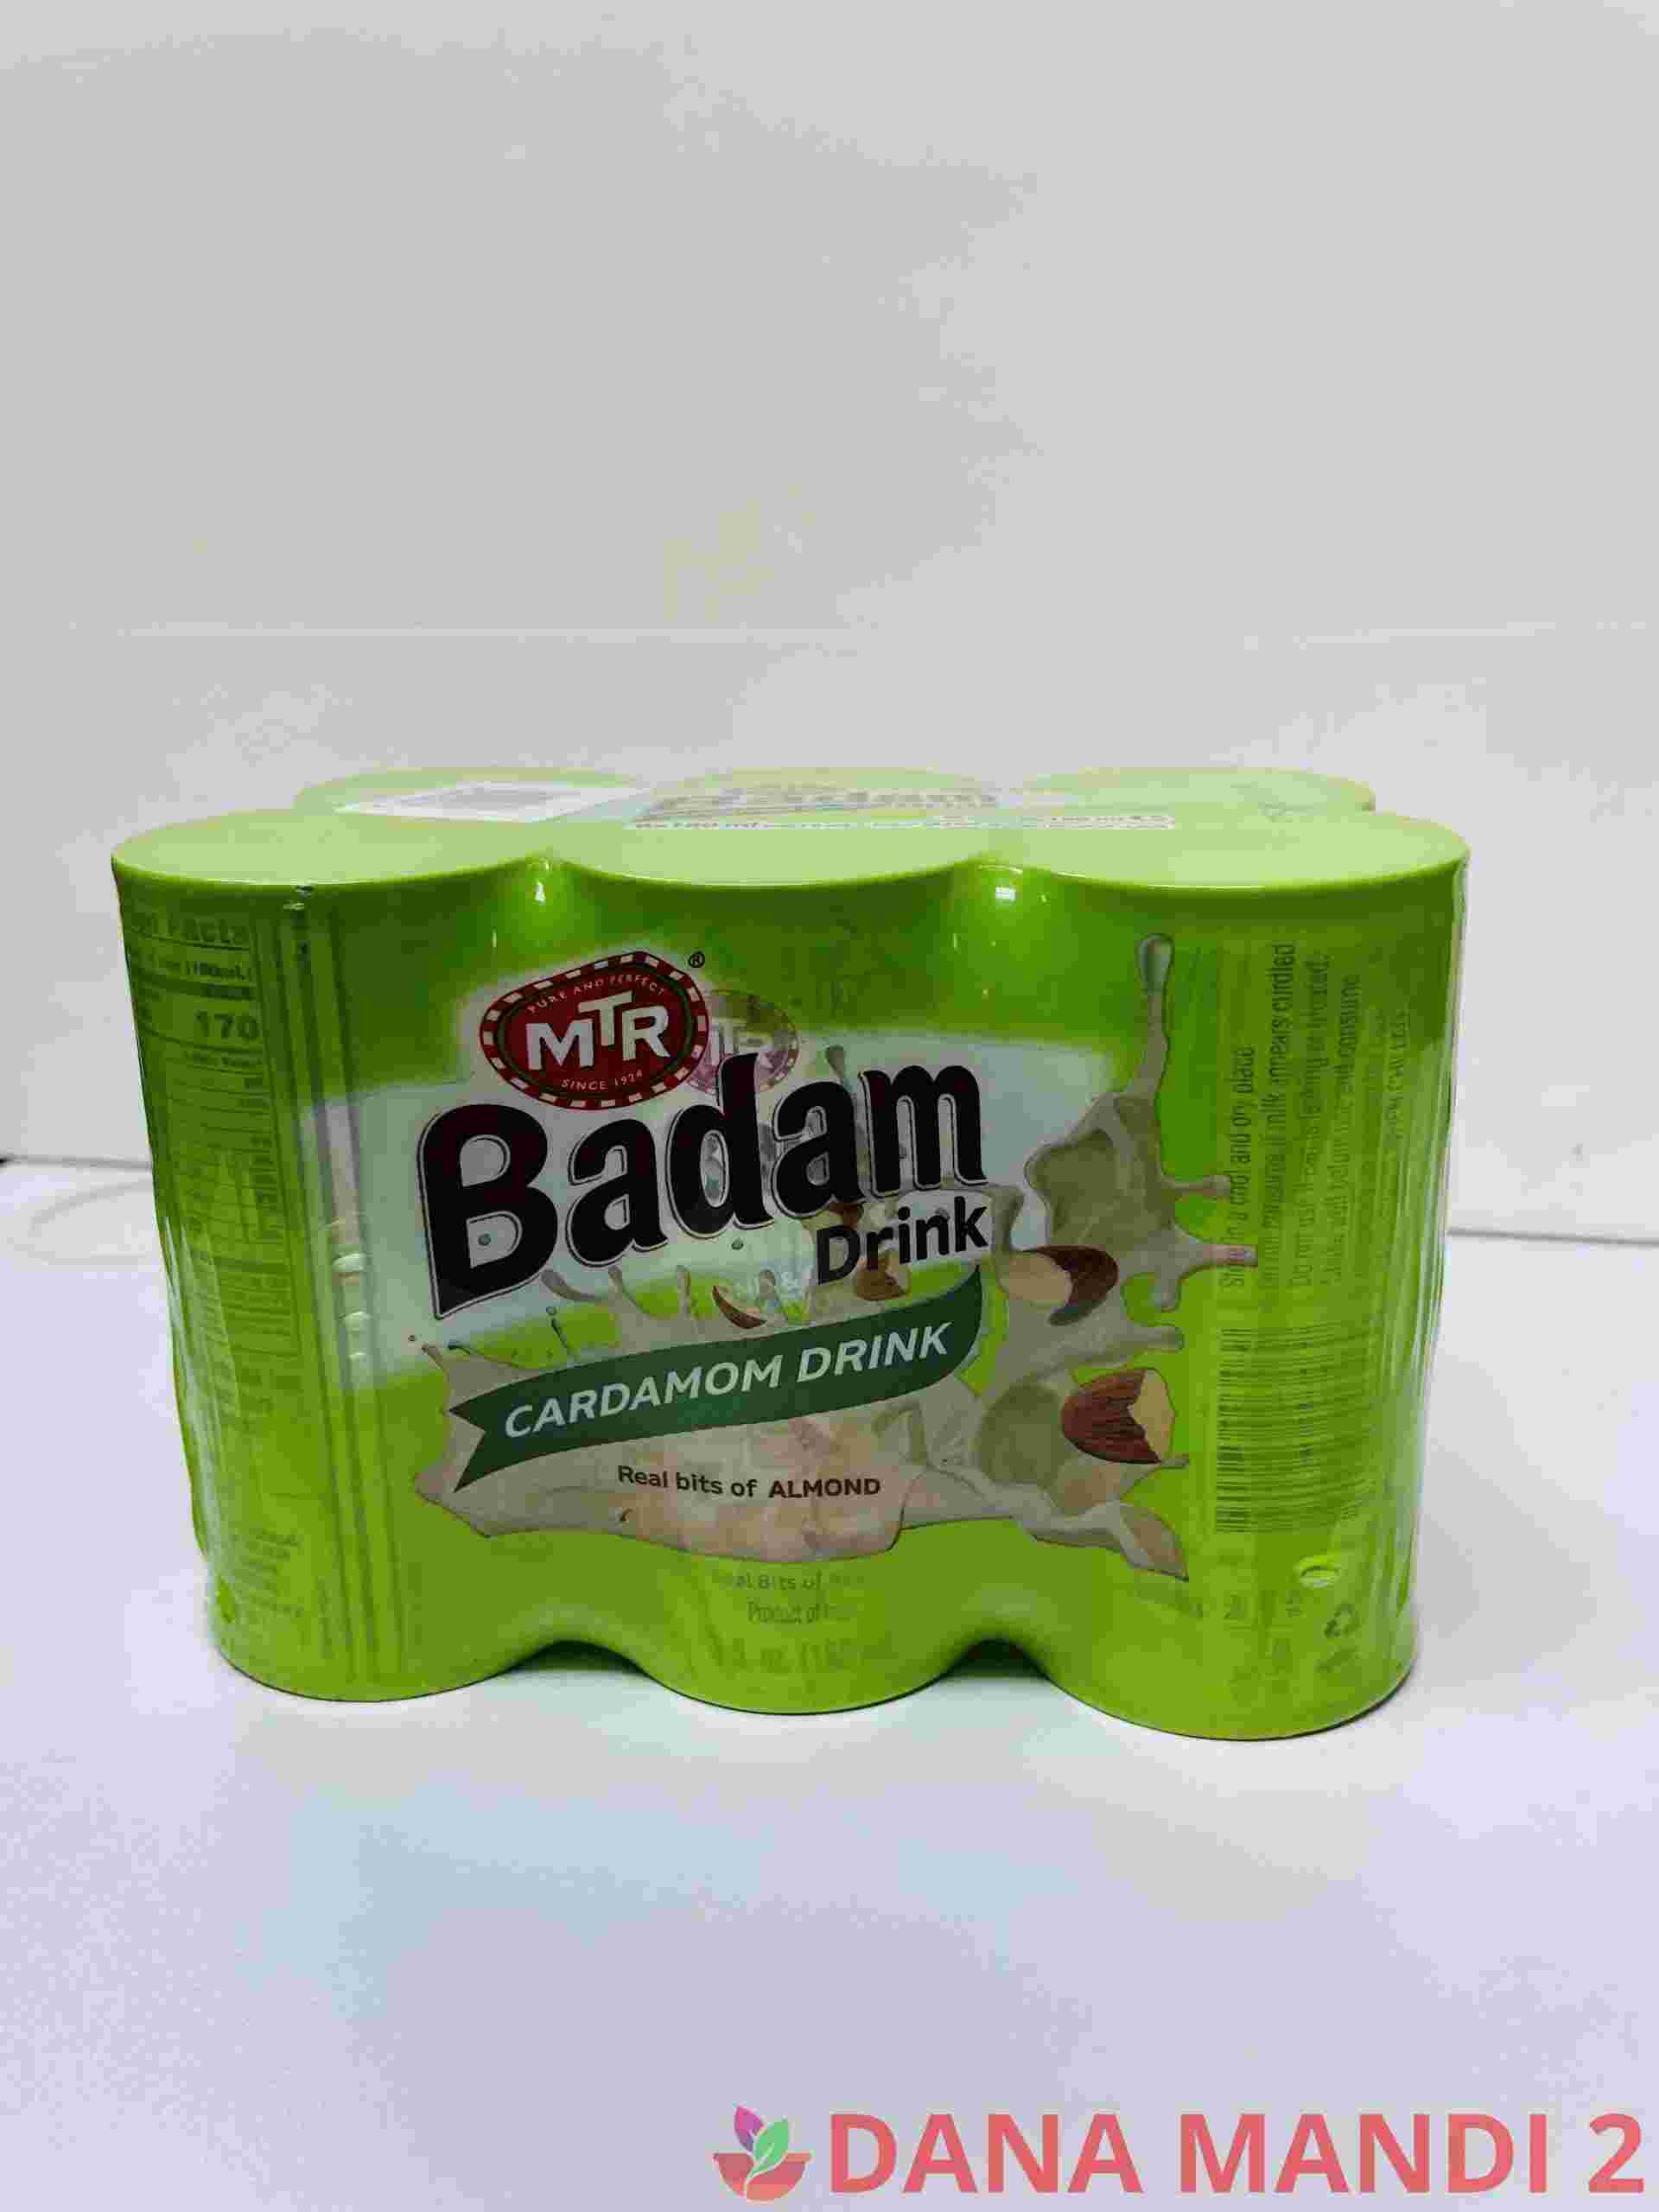 Mtr Badam Drink Cardamom Drink 6 In A Pack